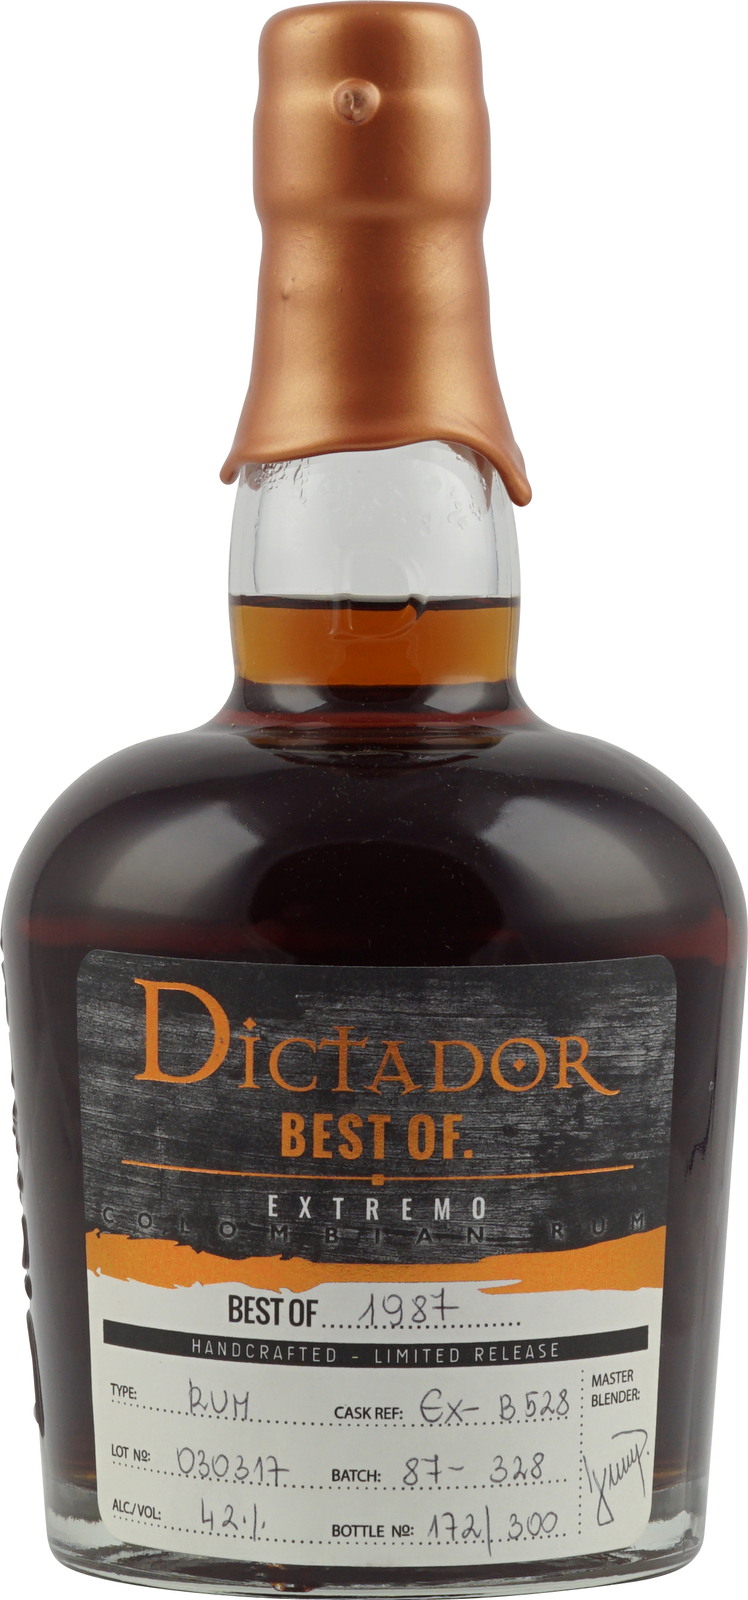 Dictador Best of 1987 Extremo 0,7 Liter 42 % Vol.